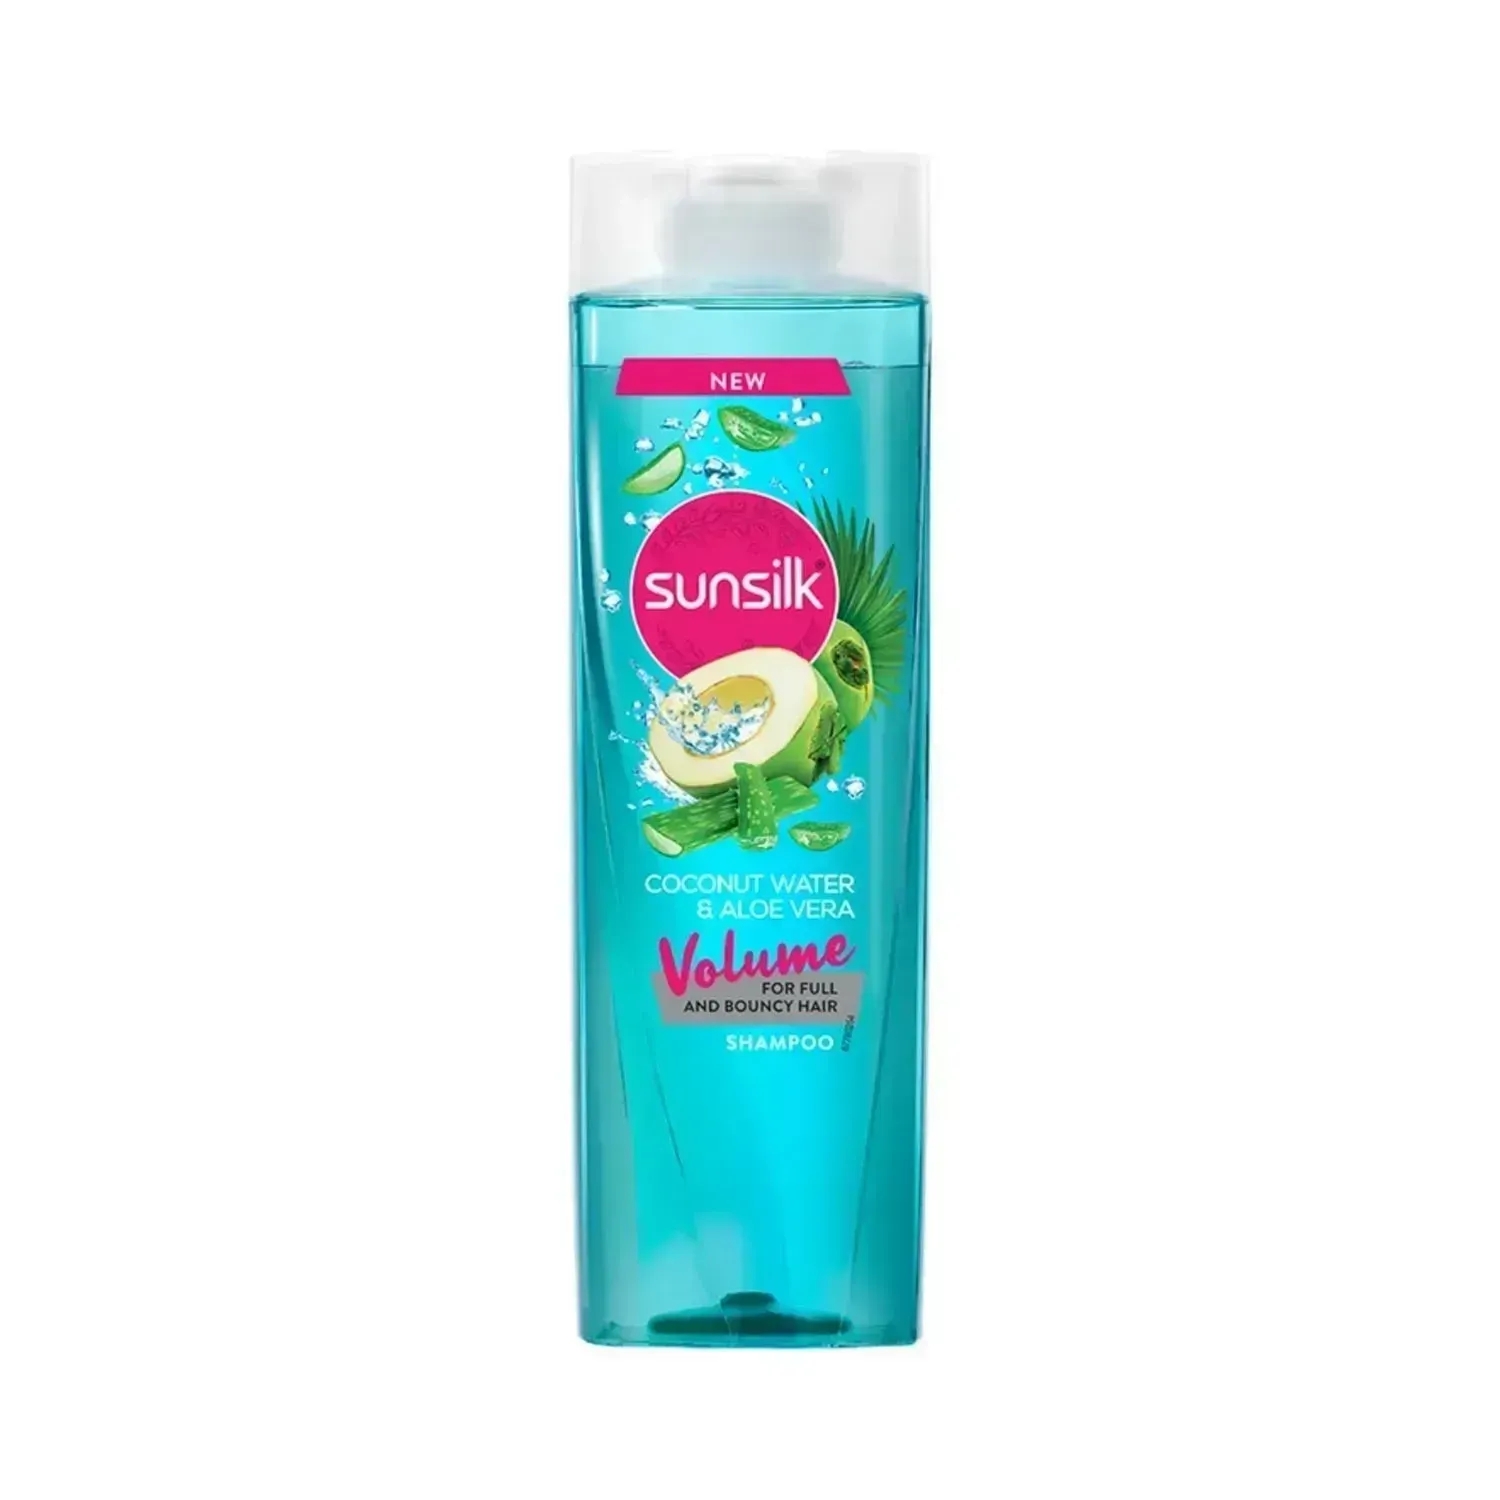 Sunsilk Coconut Water & Aloe Vera Volume Hair Shampoo - (195ml)